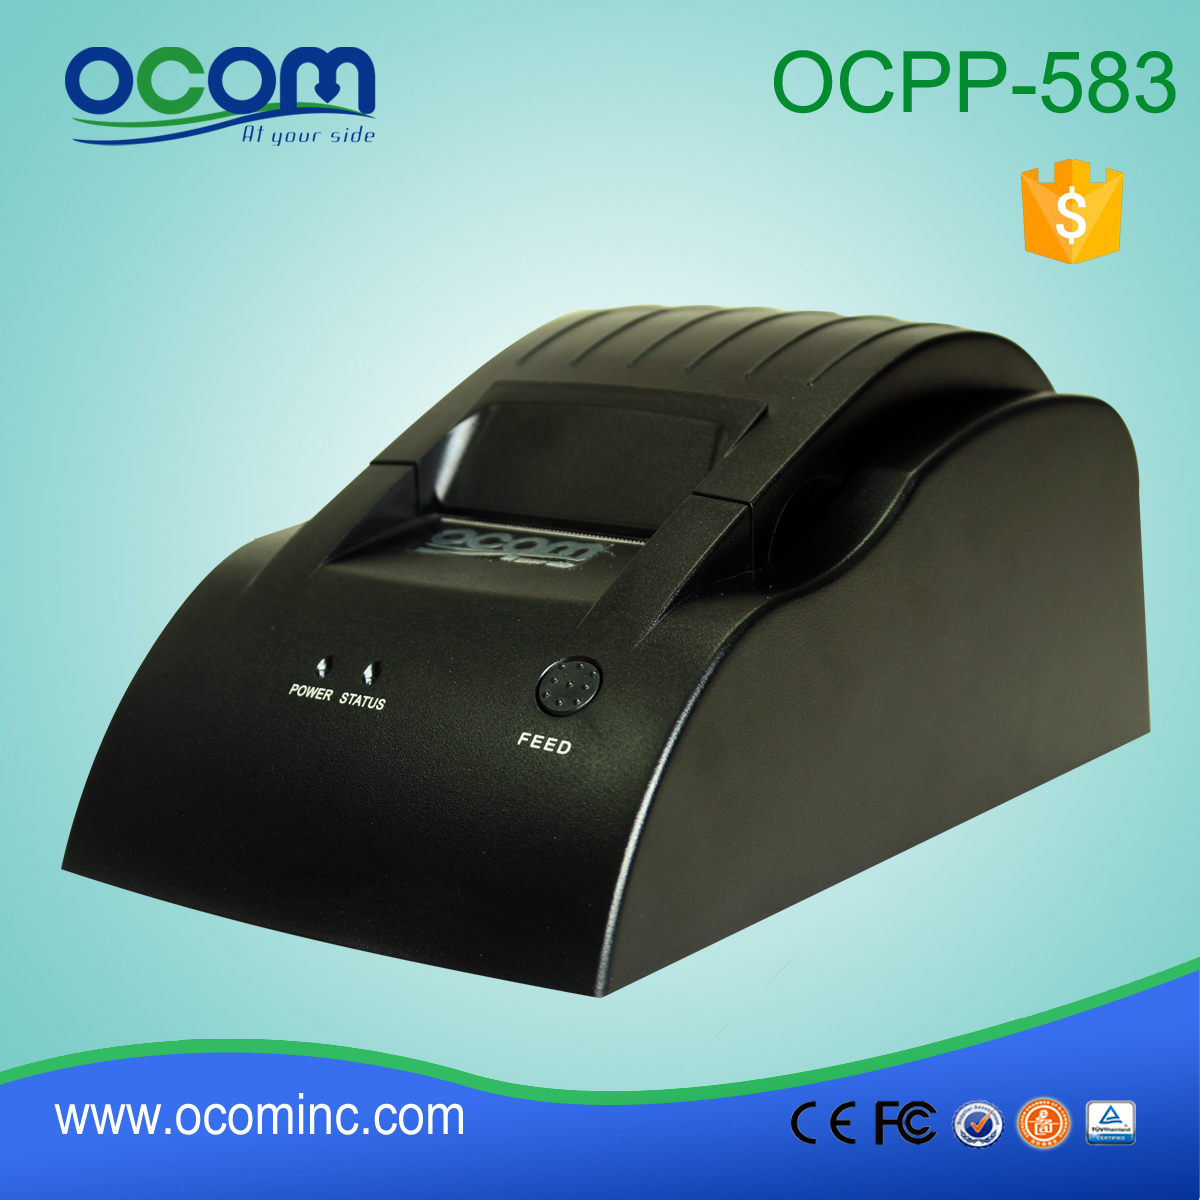 OCPP-583-L Desktop 58 mm Thermo-POS-Bondrucker LAN-Schnittstelle